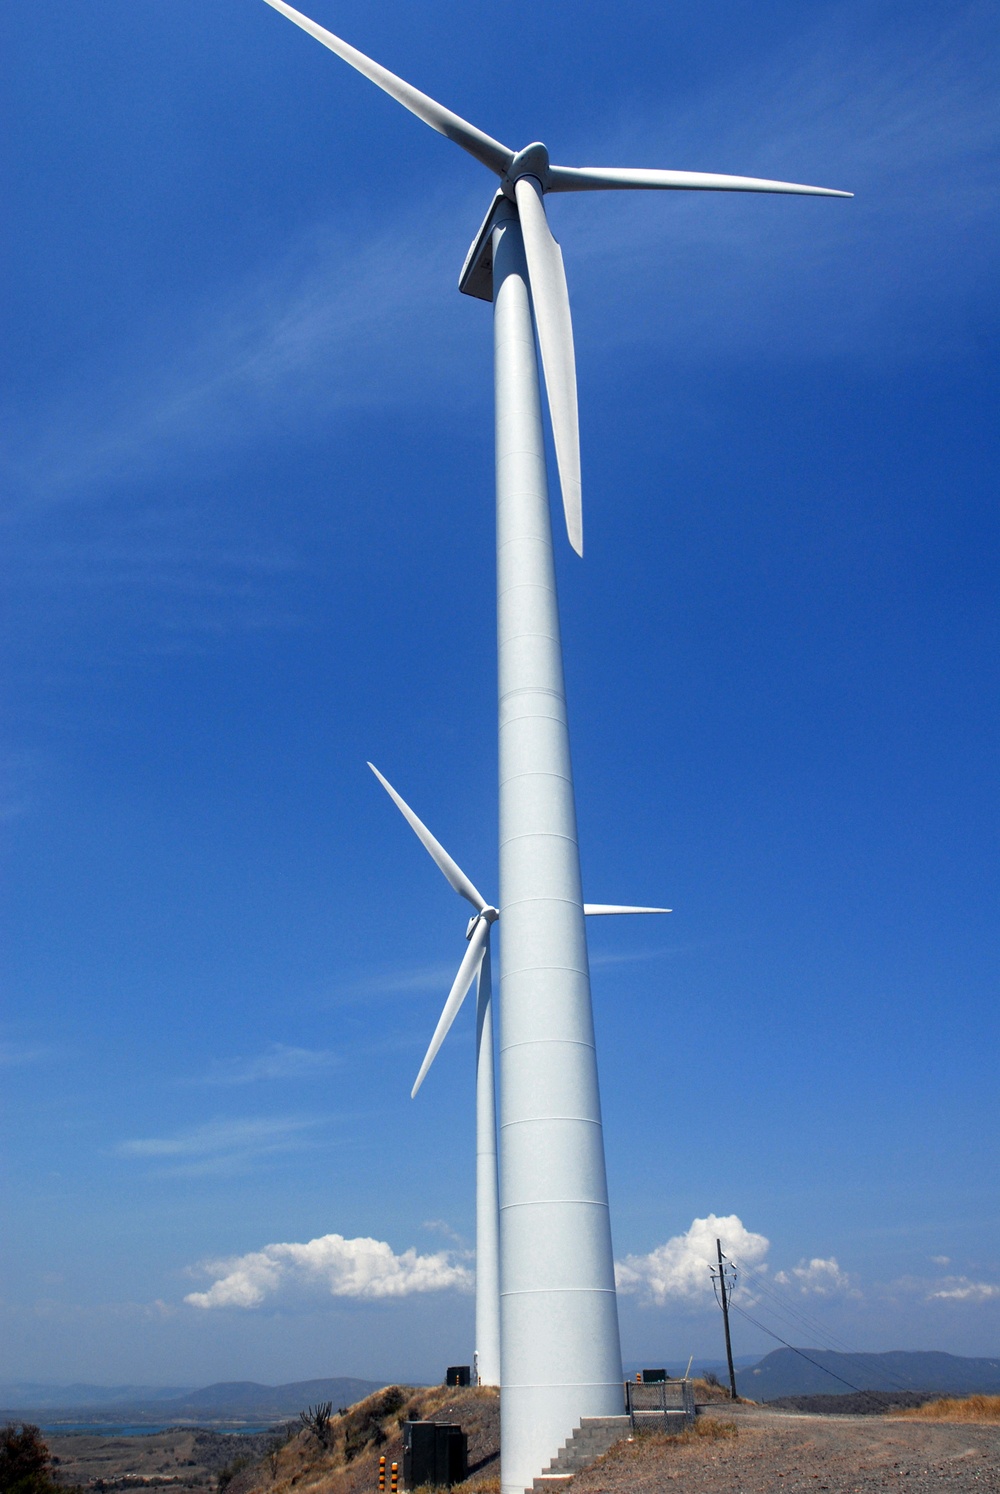 Guantanamo Bay turbines